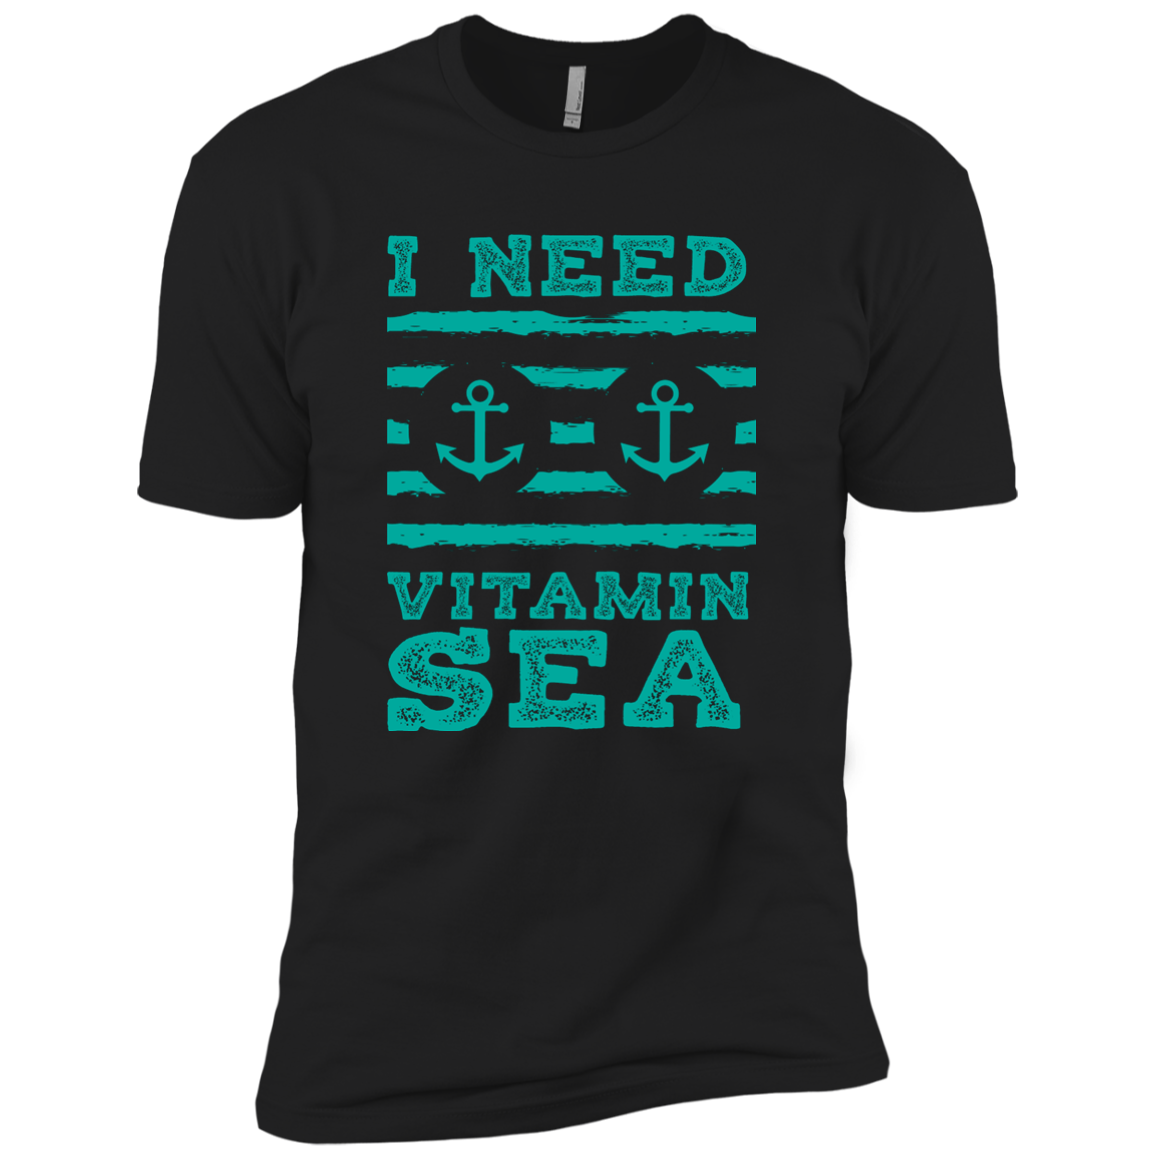 I Need Vitamin Sea